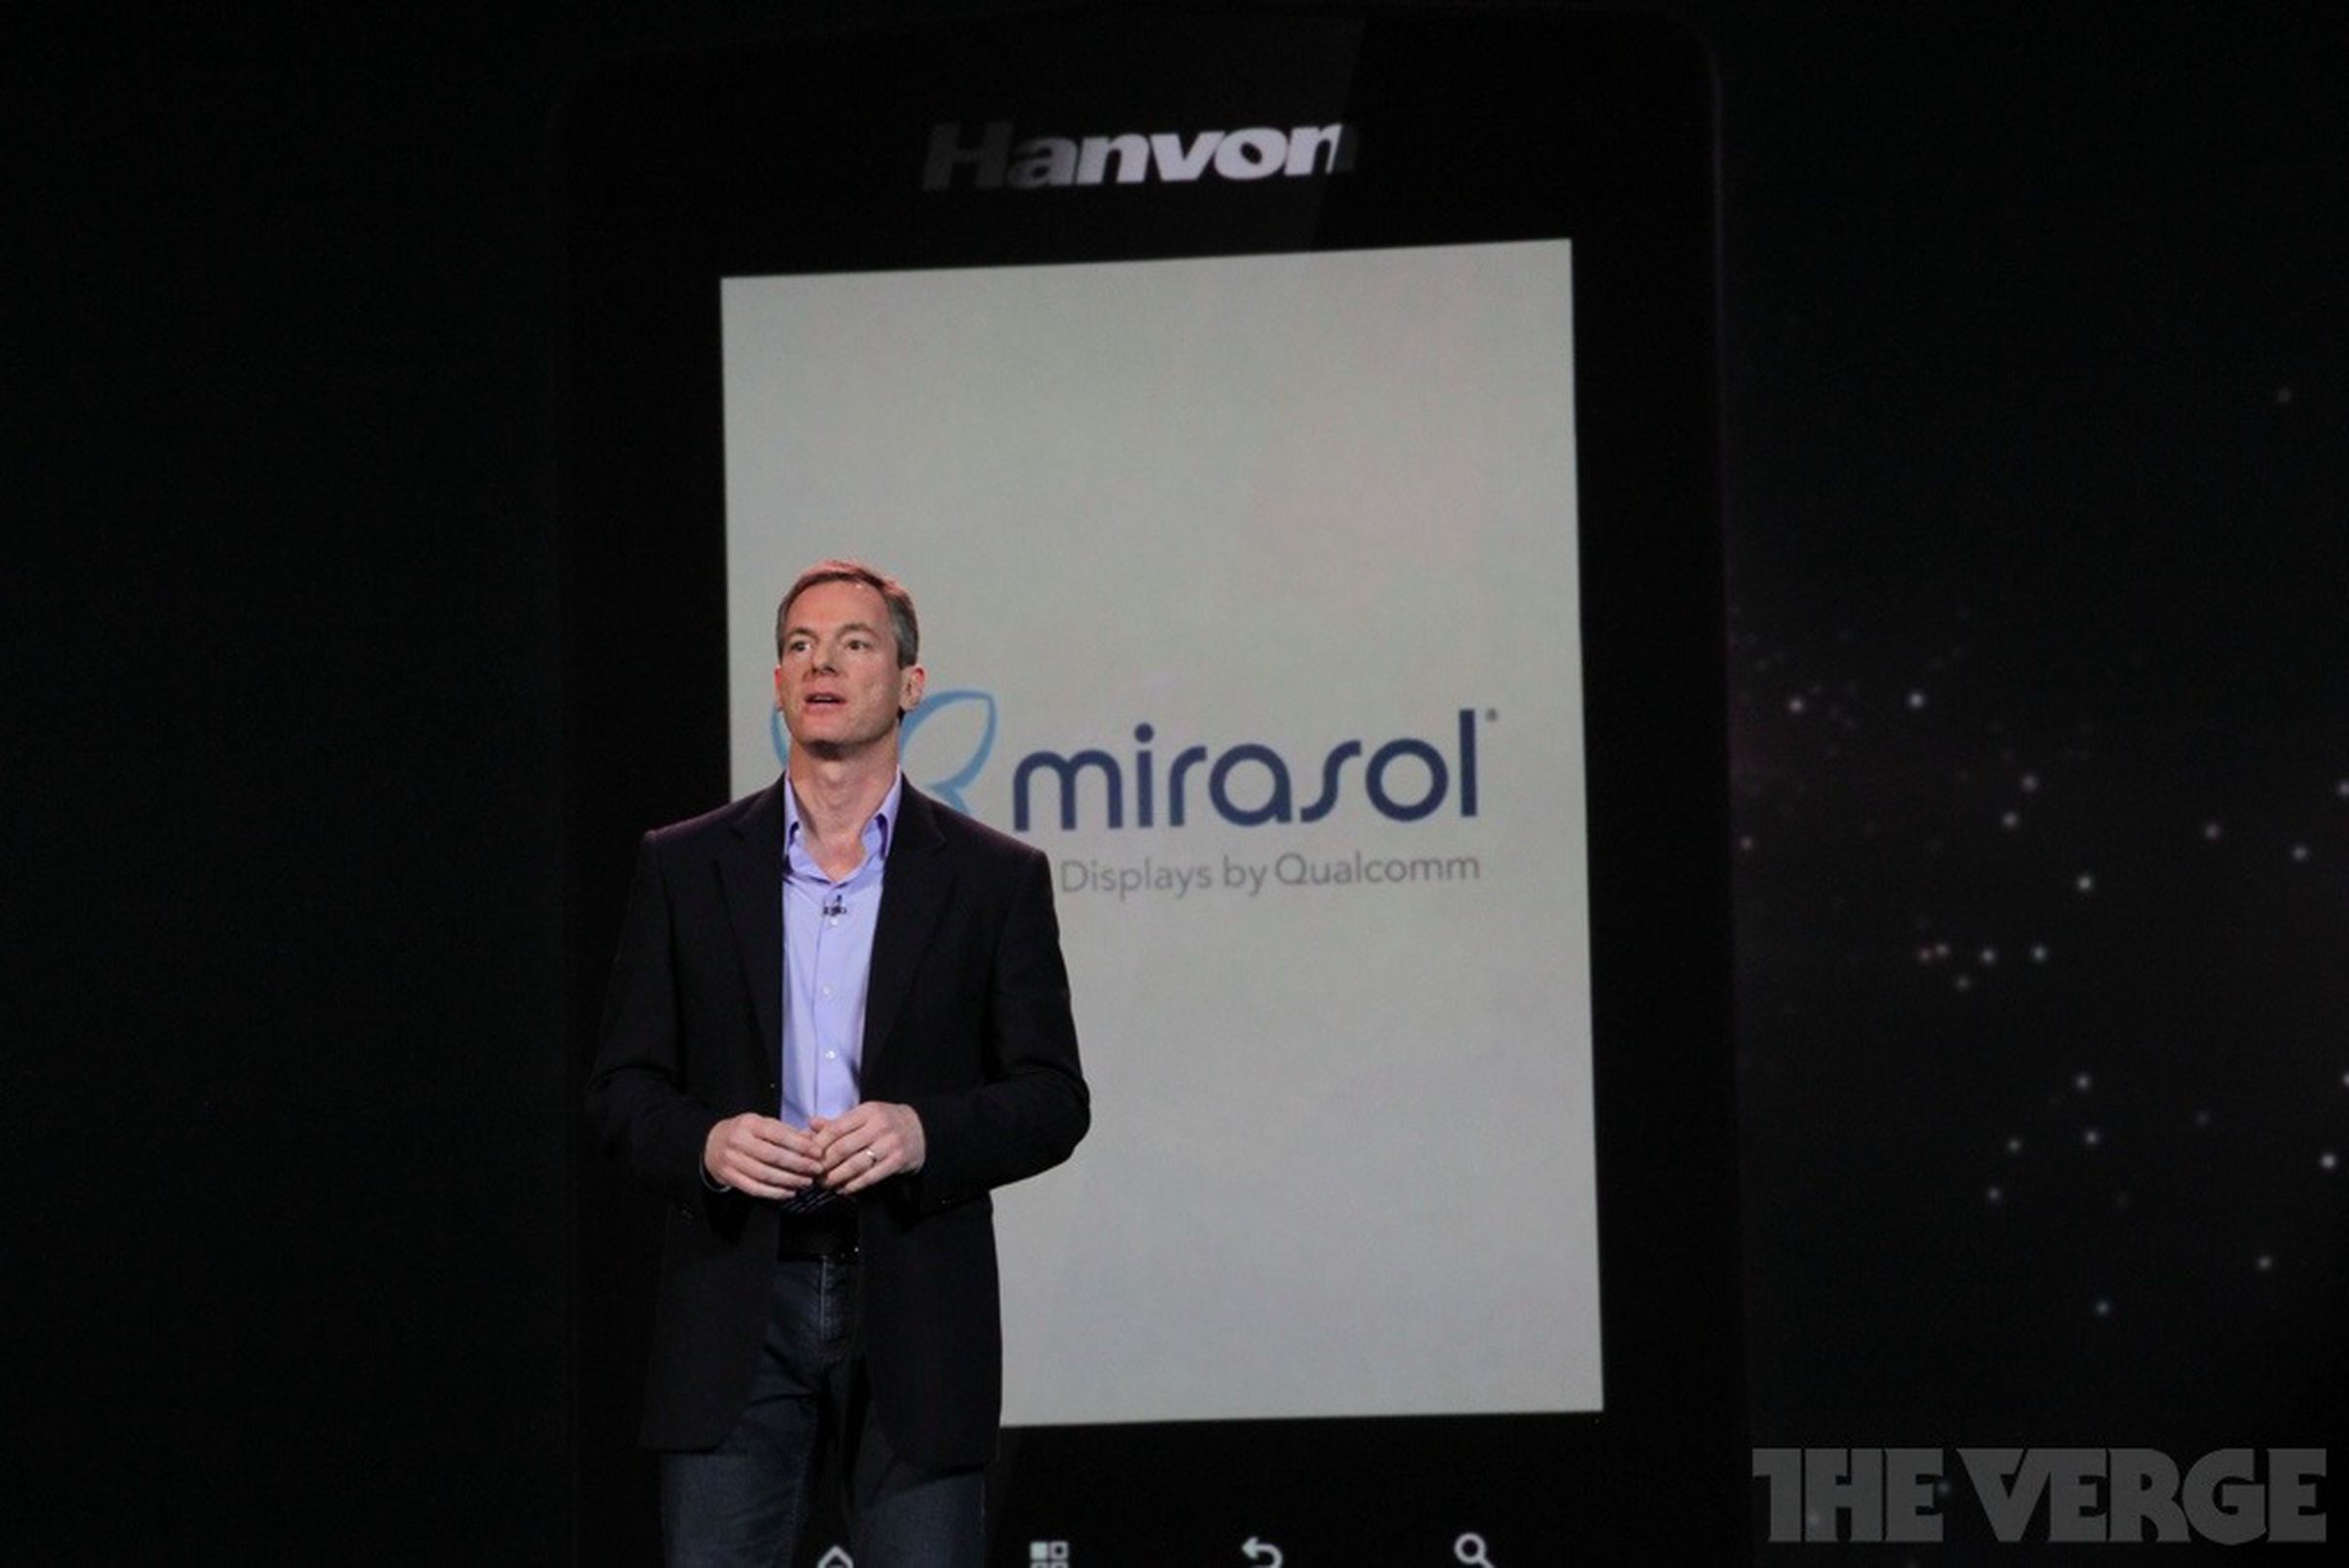 Hanvon's Mirasol color e-reader at Qualcomm's CES 2012